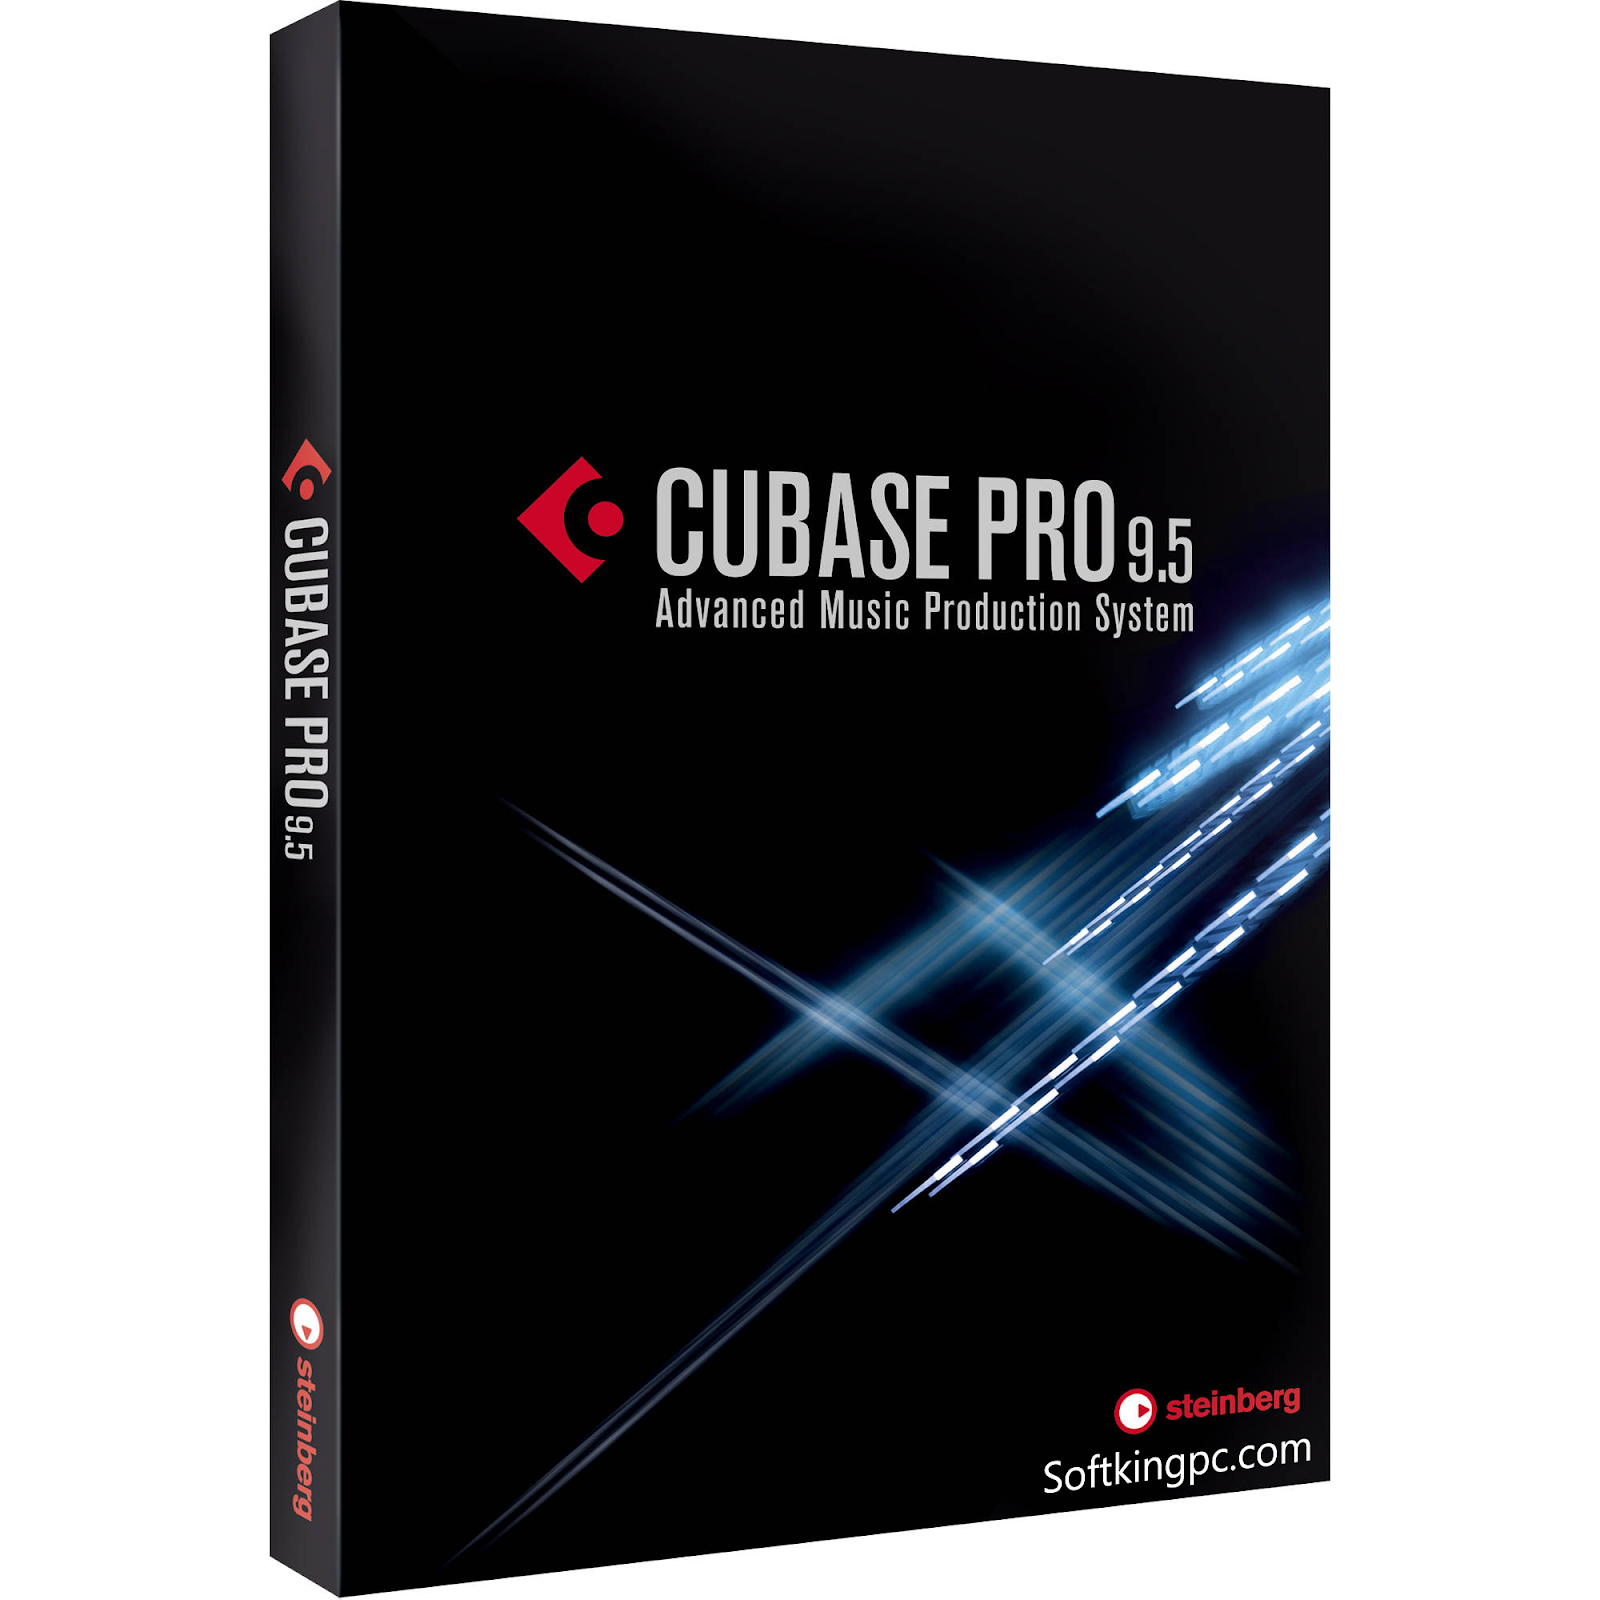 cubase download free